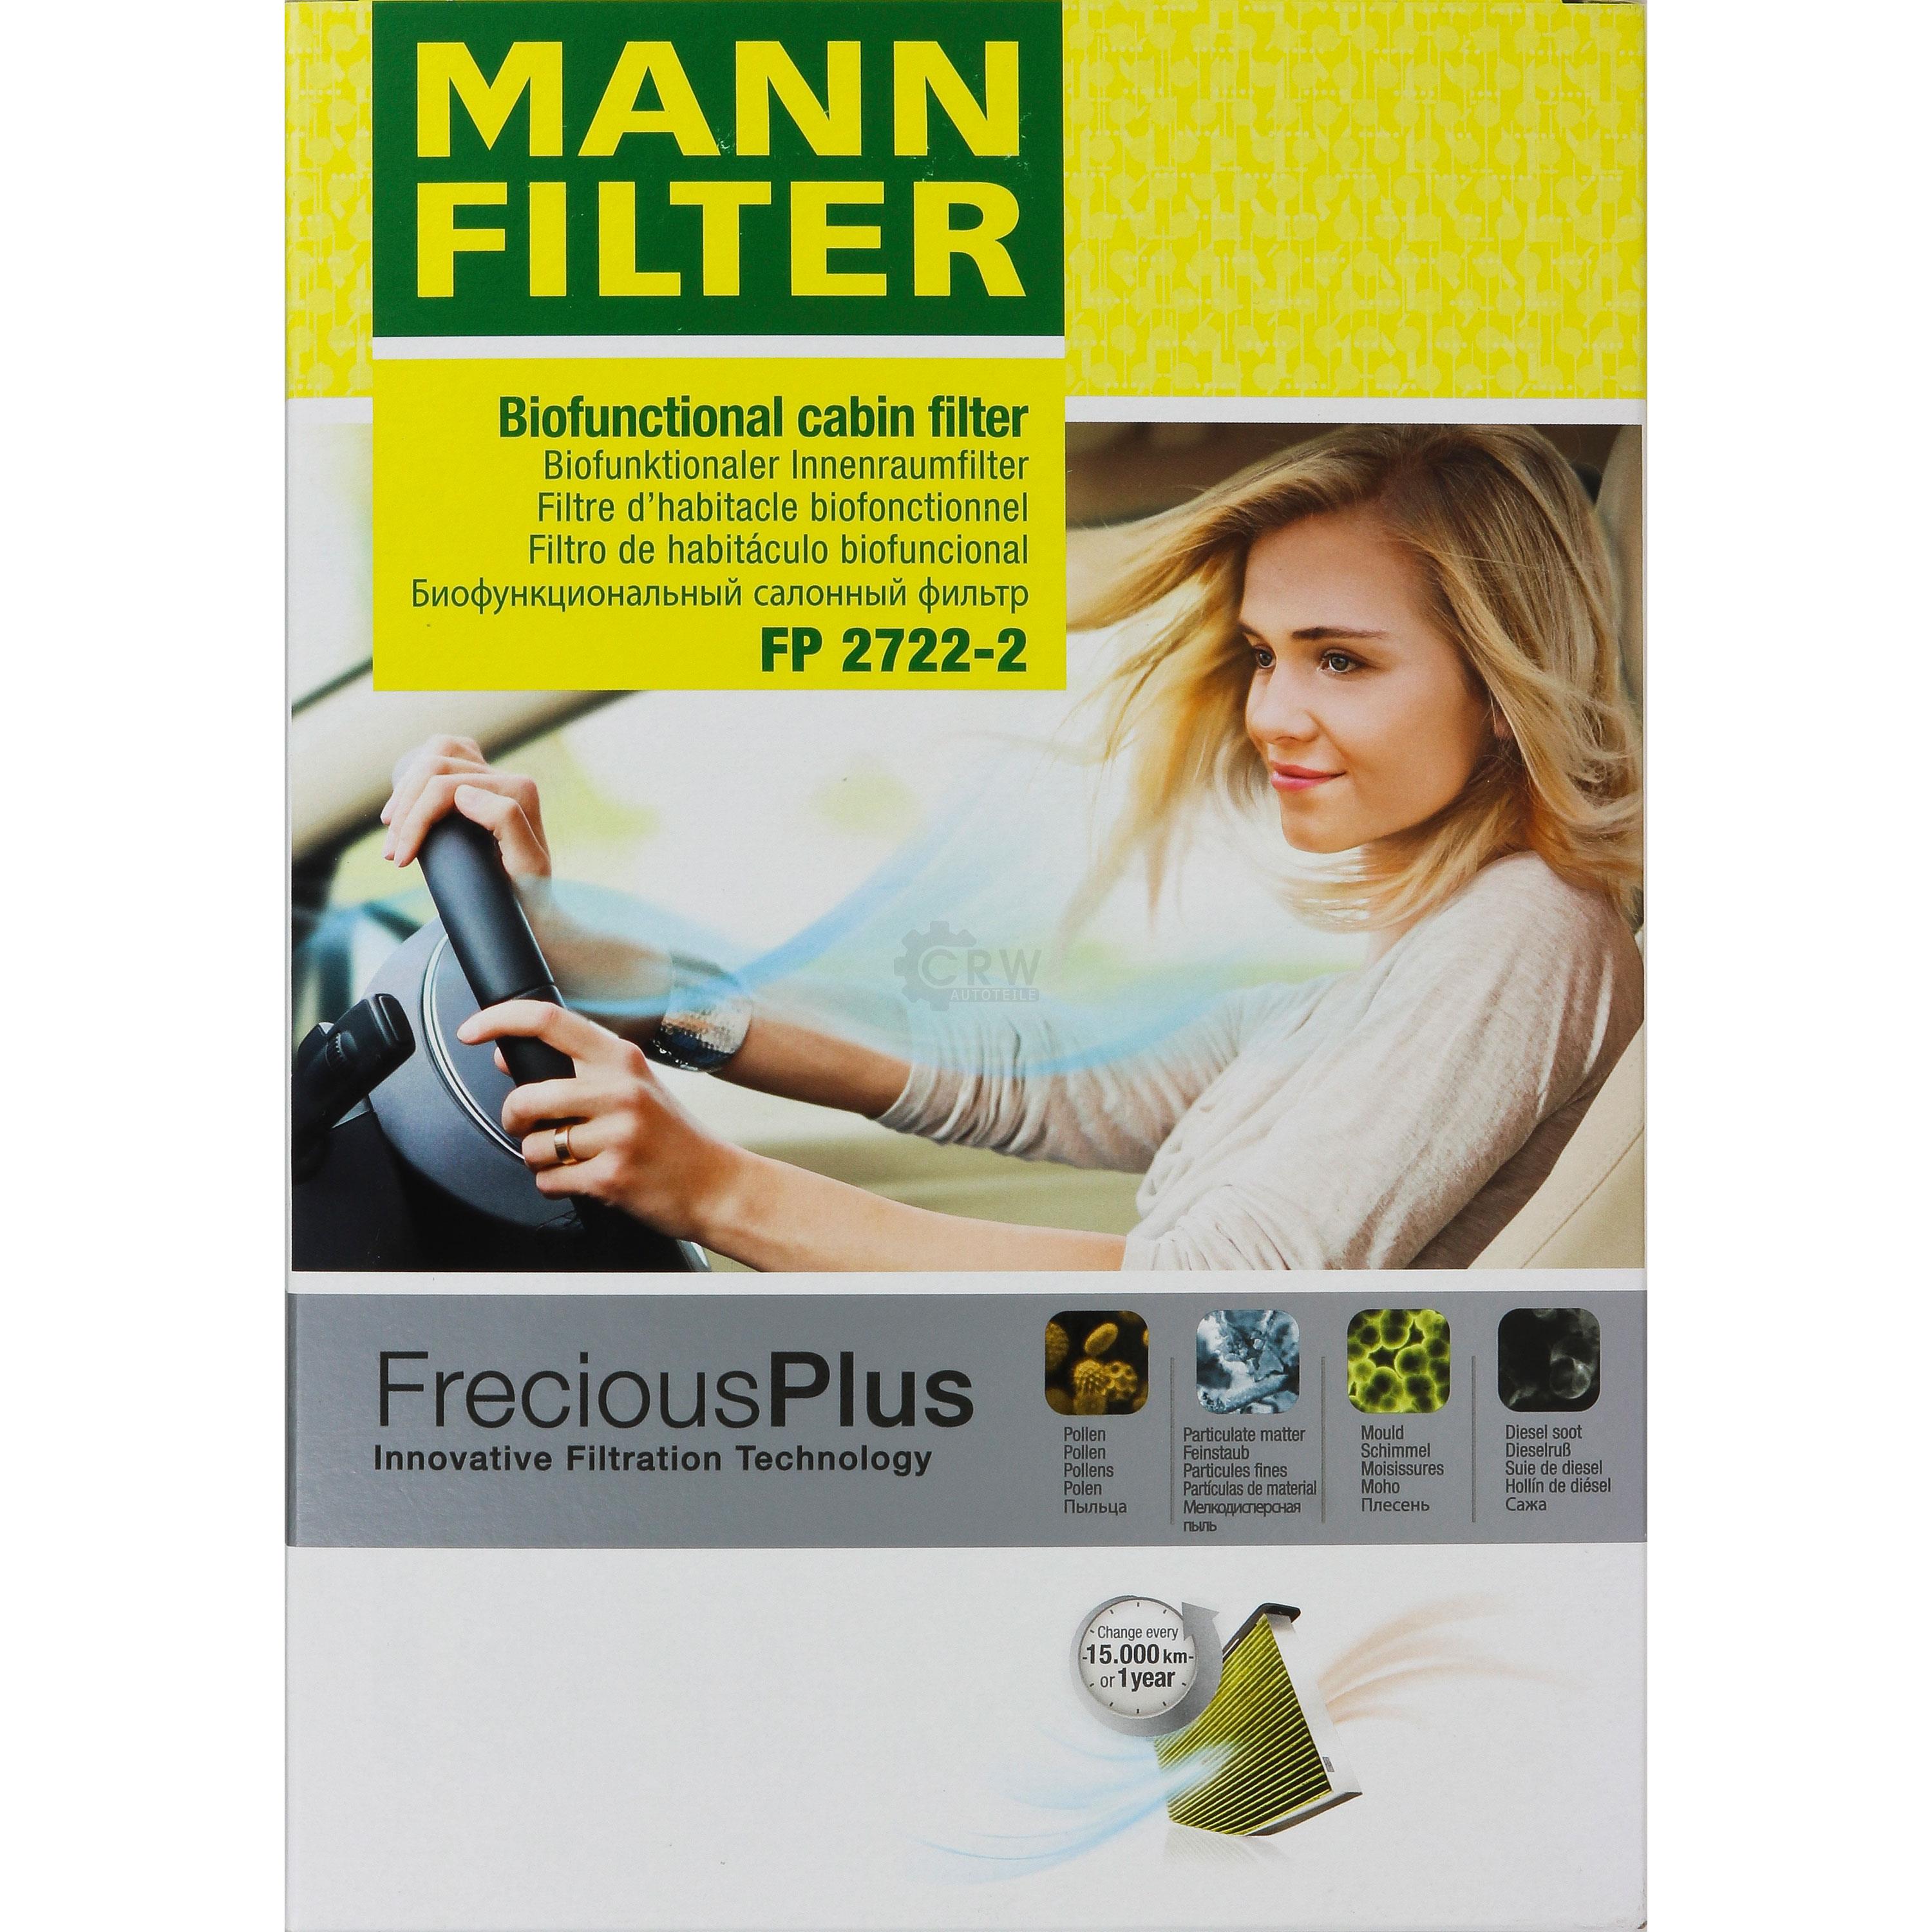 MANN-Filter Innenraumfilter Biofunctional für Allergiker FP 2722-2